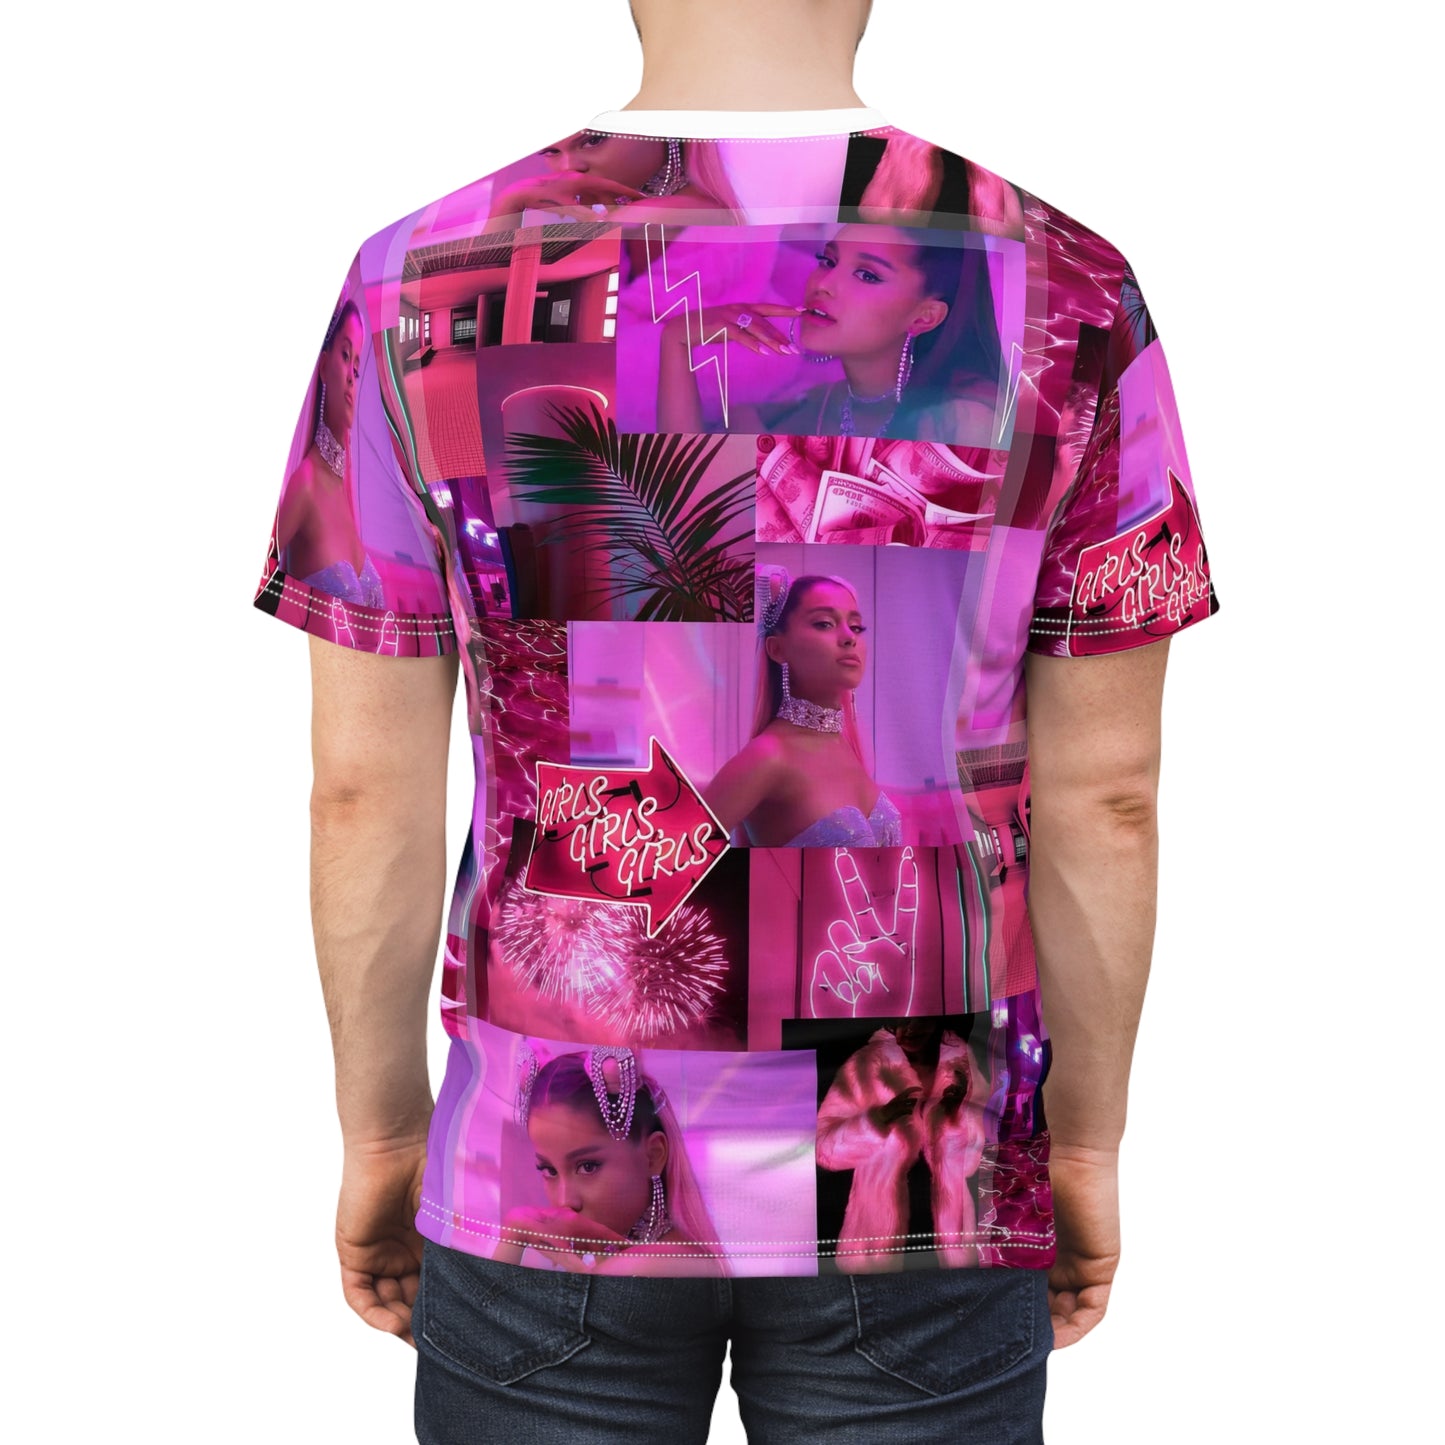 Ariana Grande 7 Rings Collage Unisex Tee Shirt